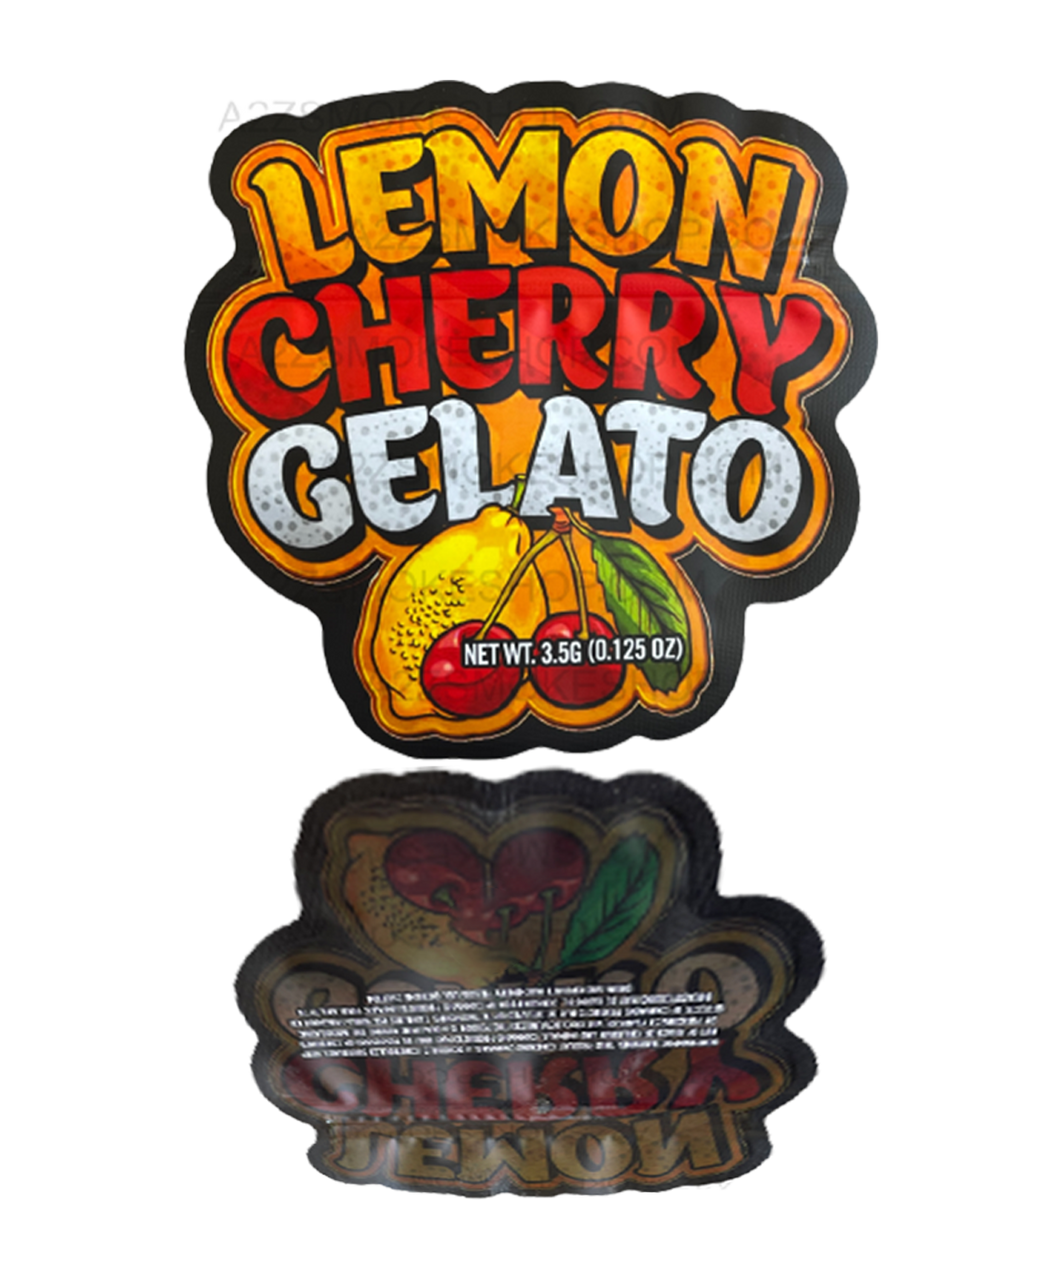 Lemon Cherry Gelato Cut Out Mylar Bags 3.5g Die cut